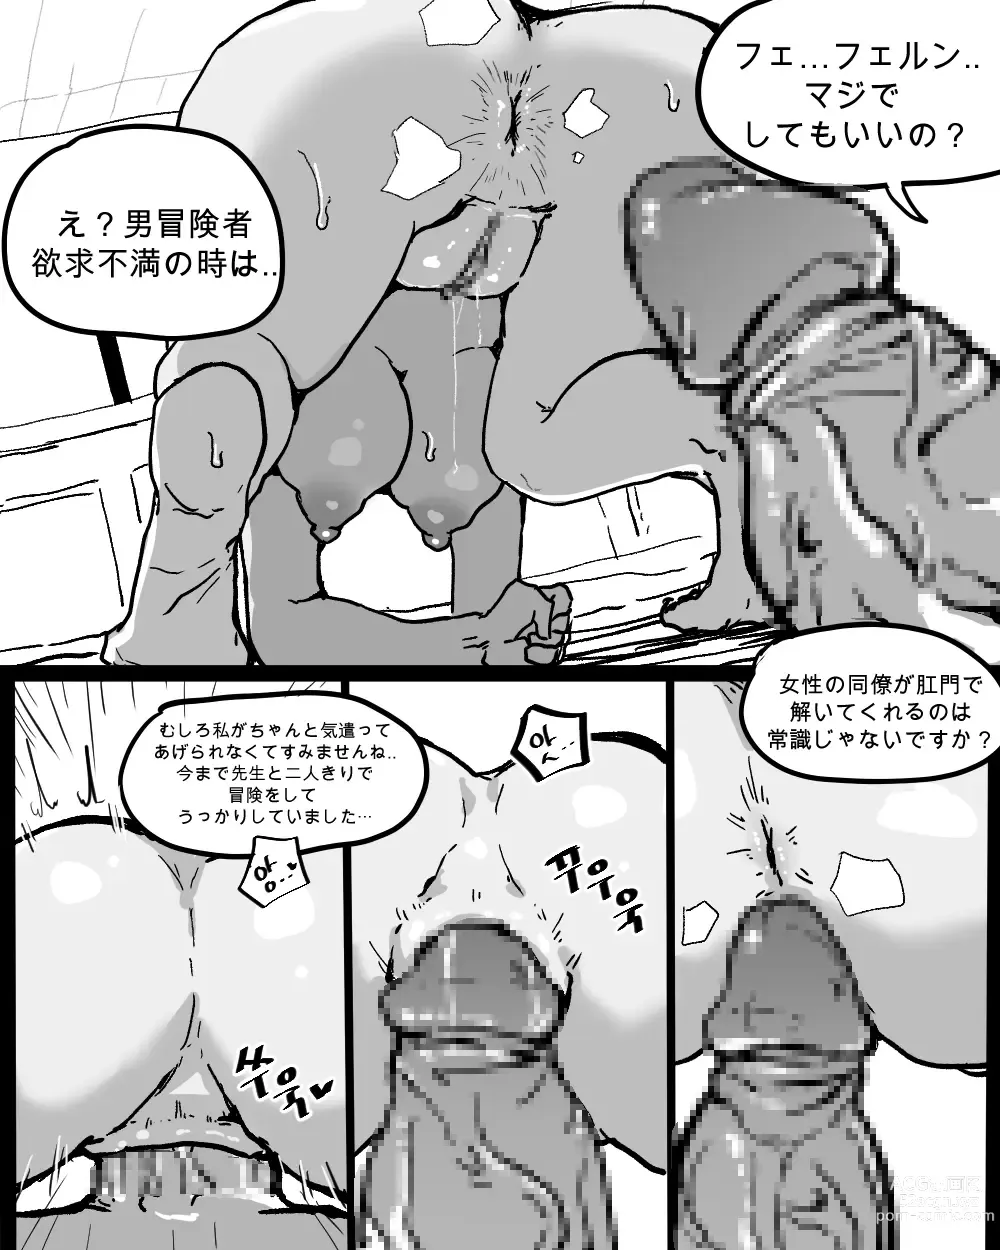 Page 3 of doujinshi Yatte Shimatta Stark